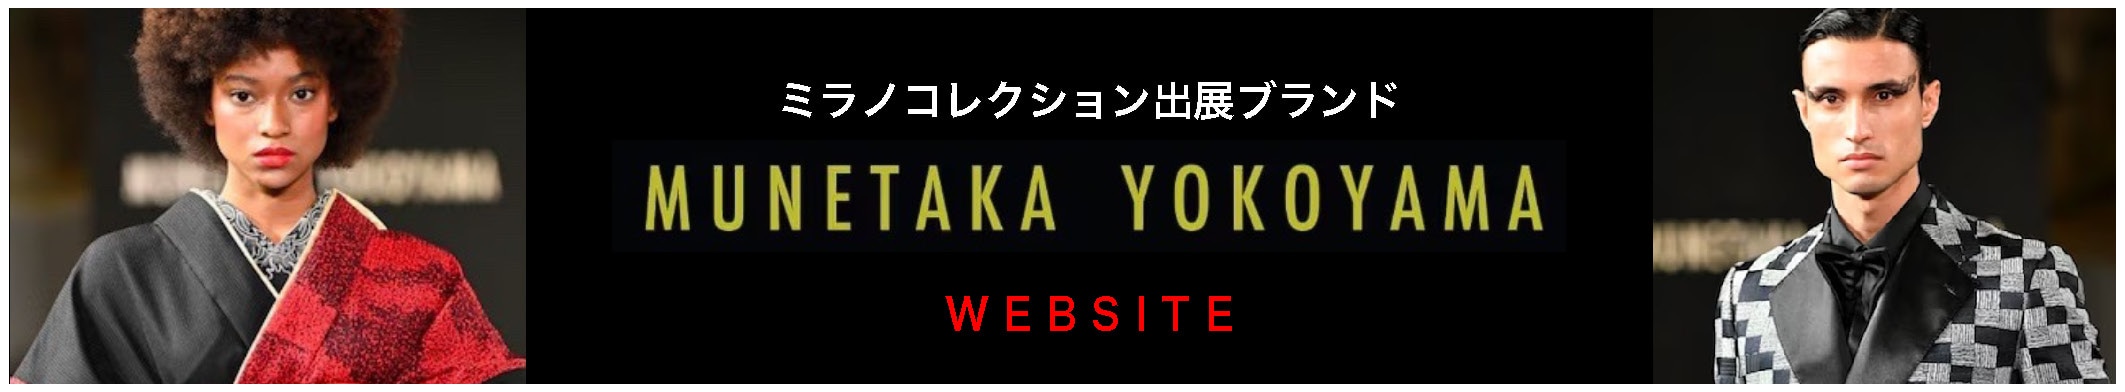 MUNETAKA YOKOYAMA_WebSite_banner1